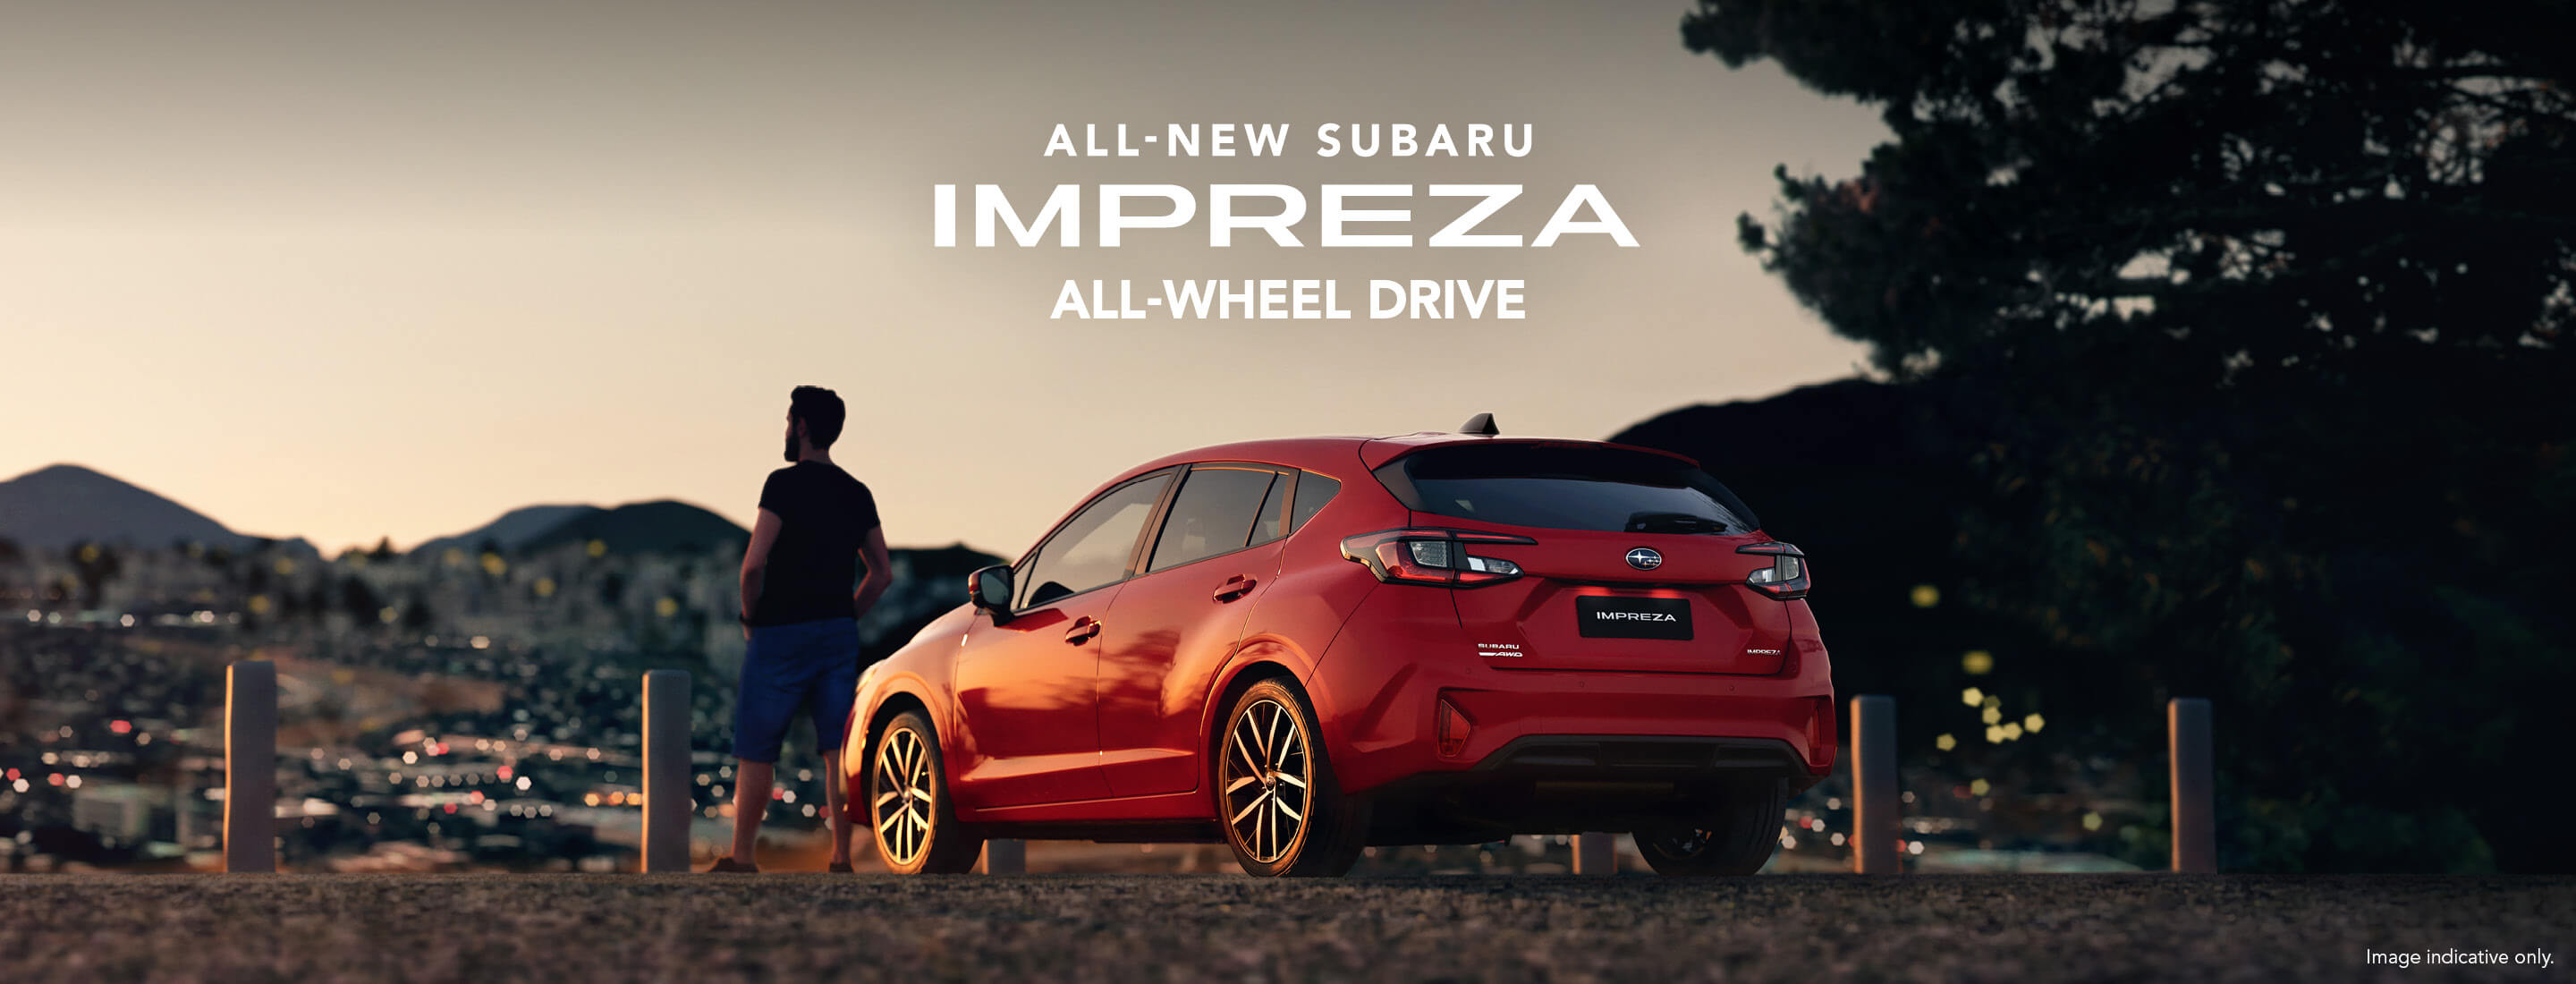 New Subaru All-New Impreza for sale in Cairns - Trinity Subaru